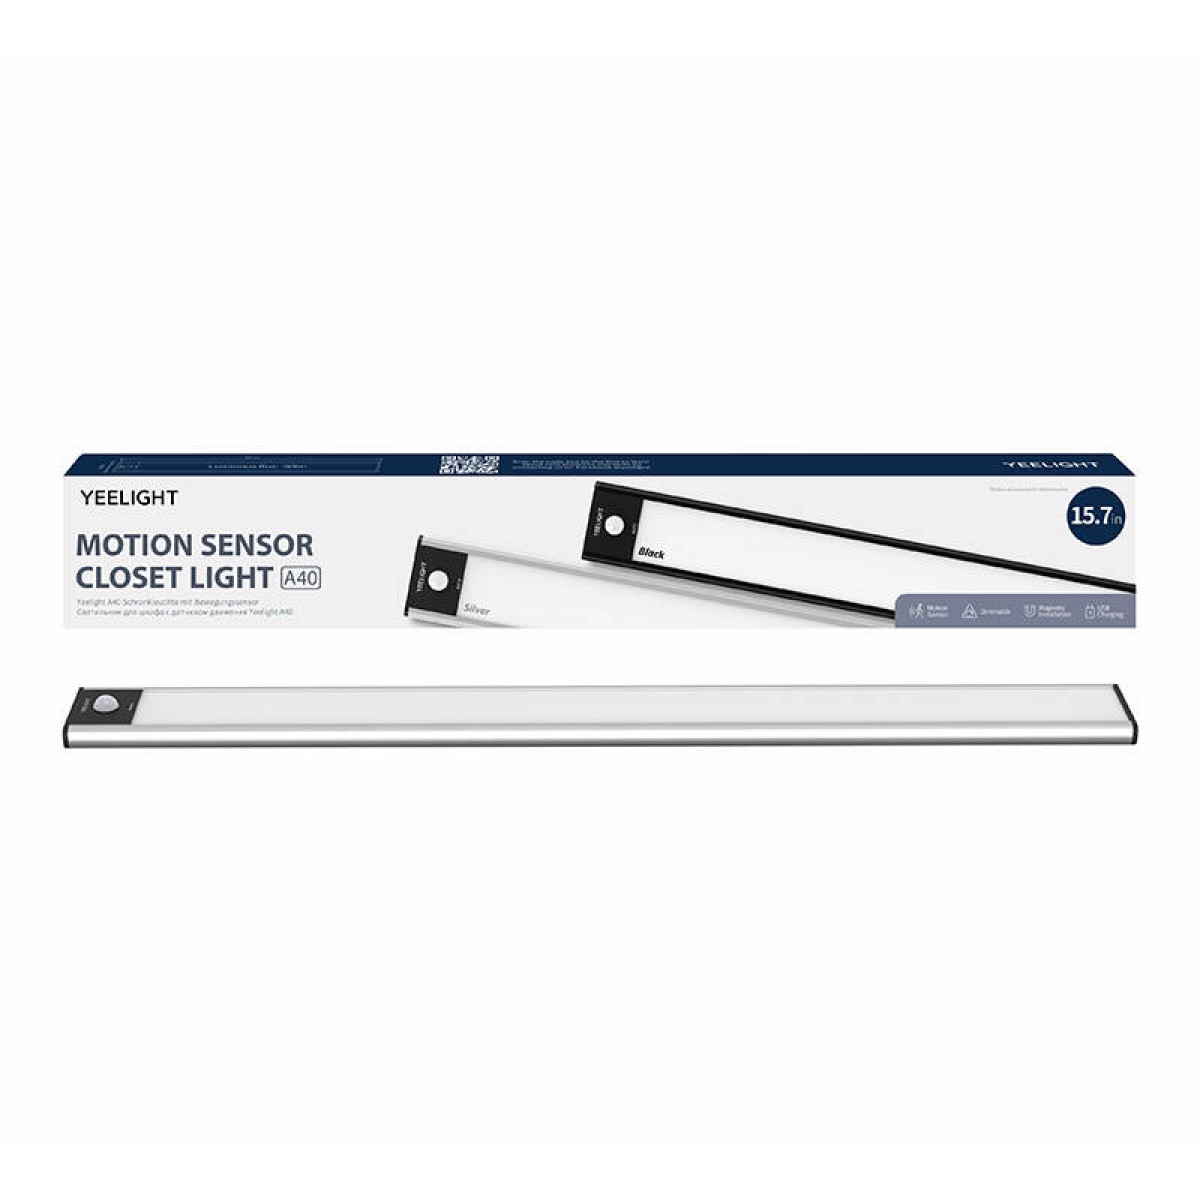 Yeelight Closet Light 40cm (Silver) 2700K